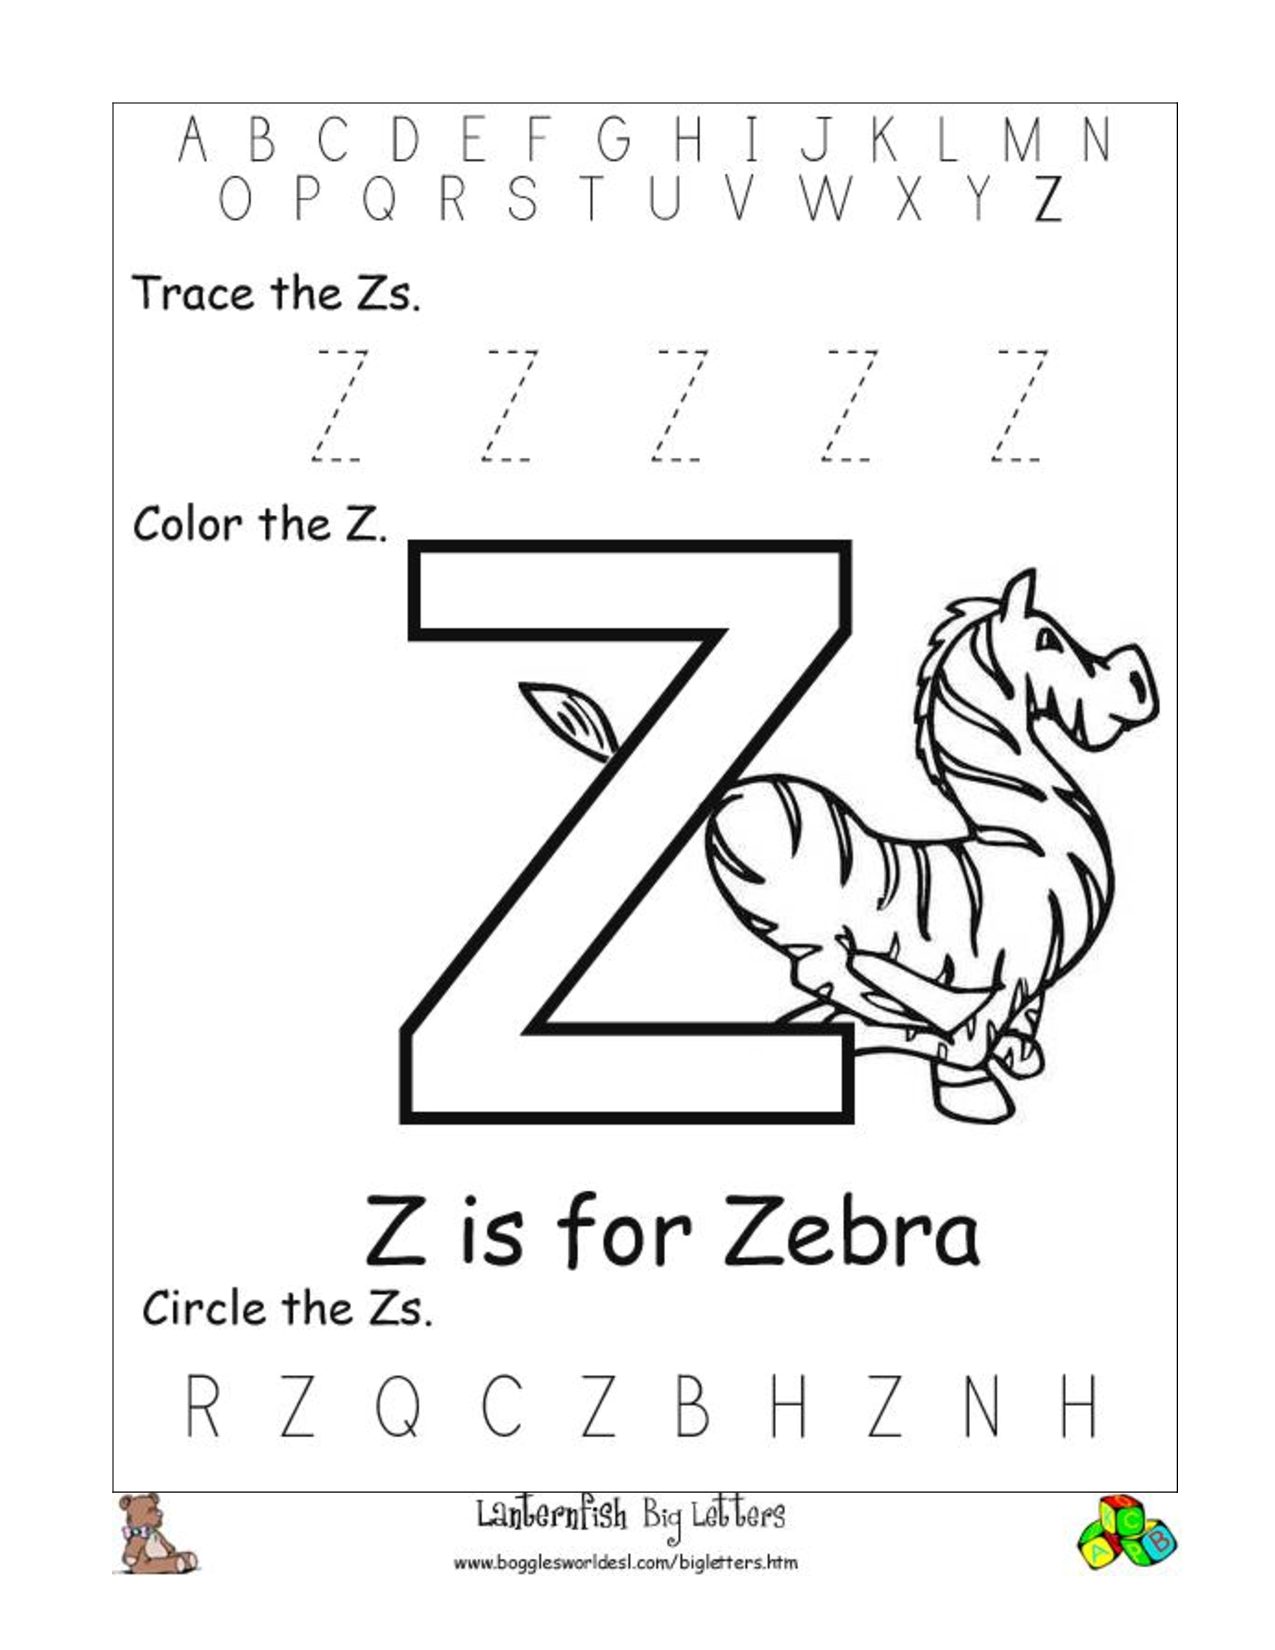 Pinswitty Mae On Projects To Try | Preschool Letters regarding Letter Z Worksheets For Preschool